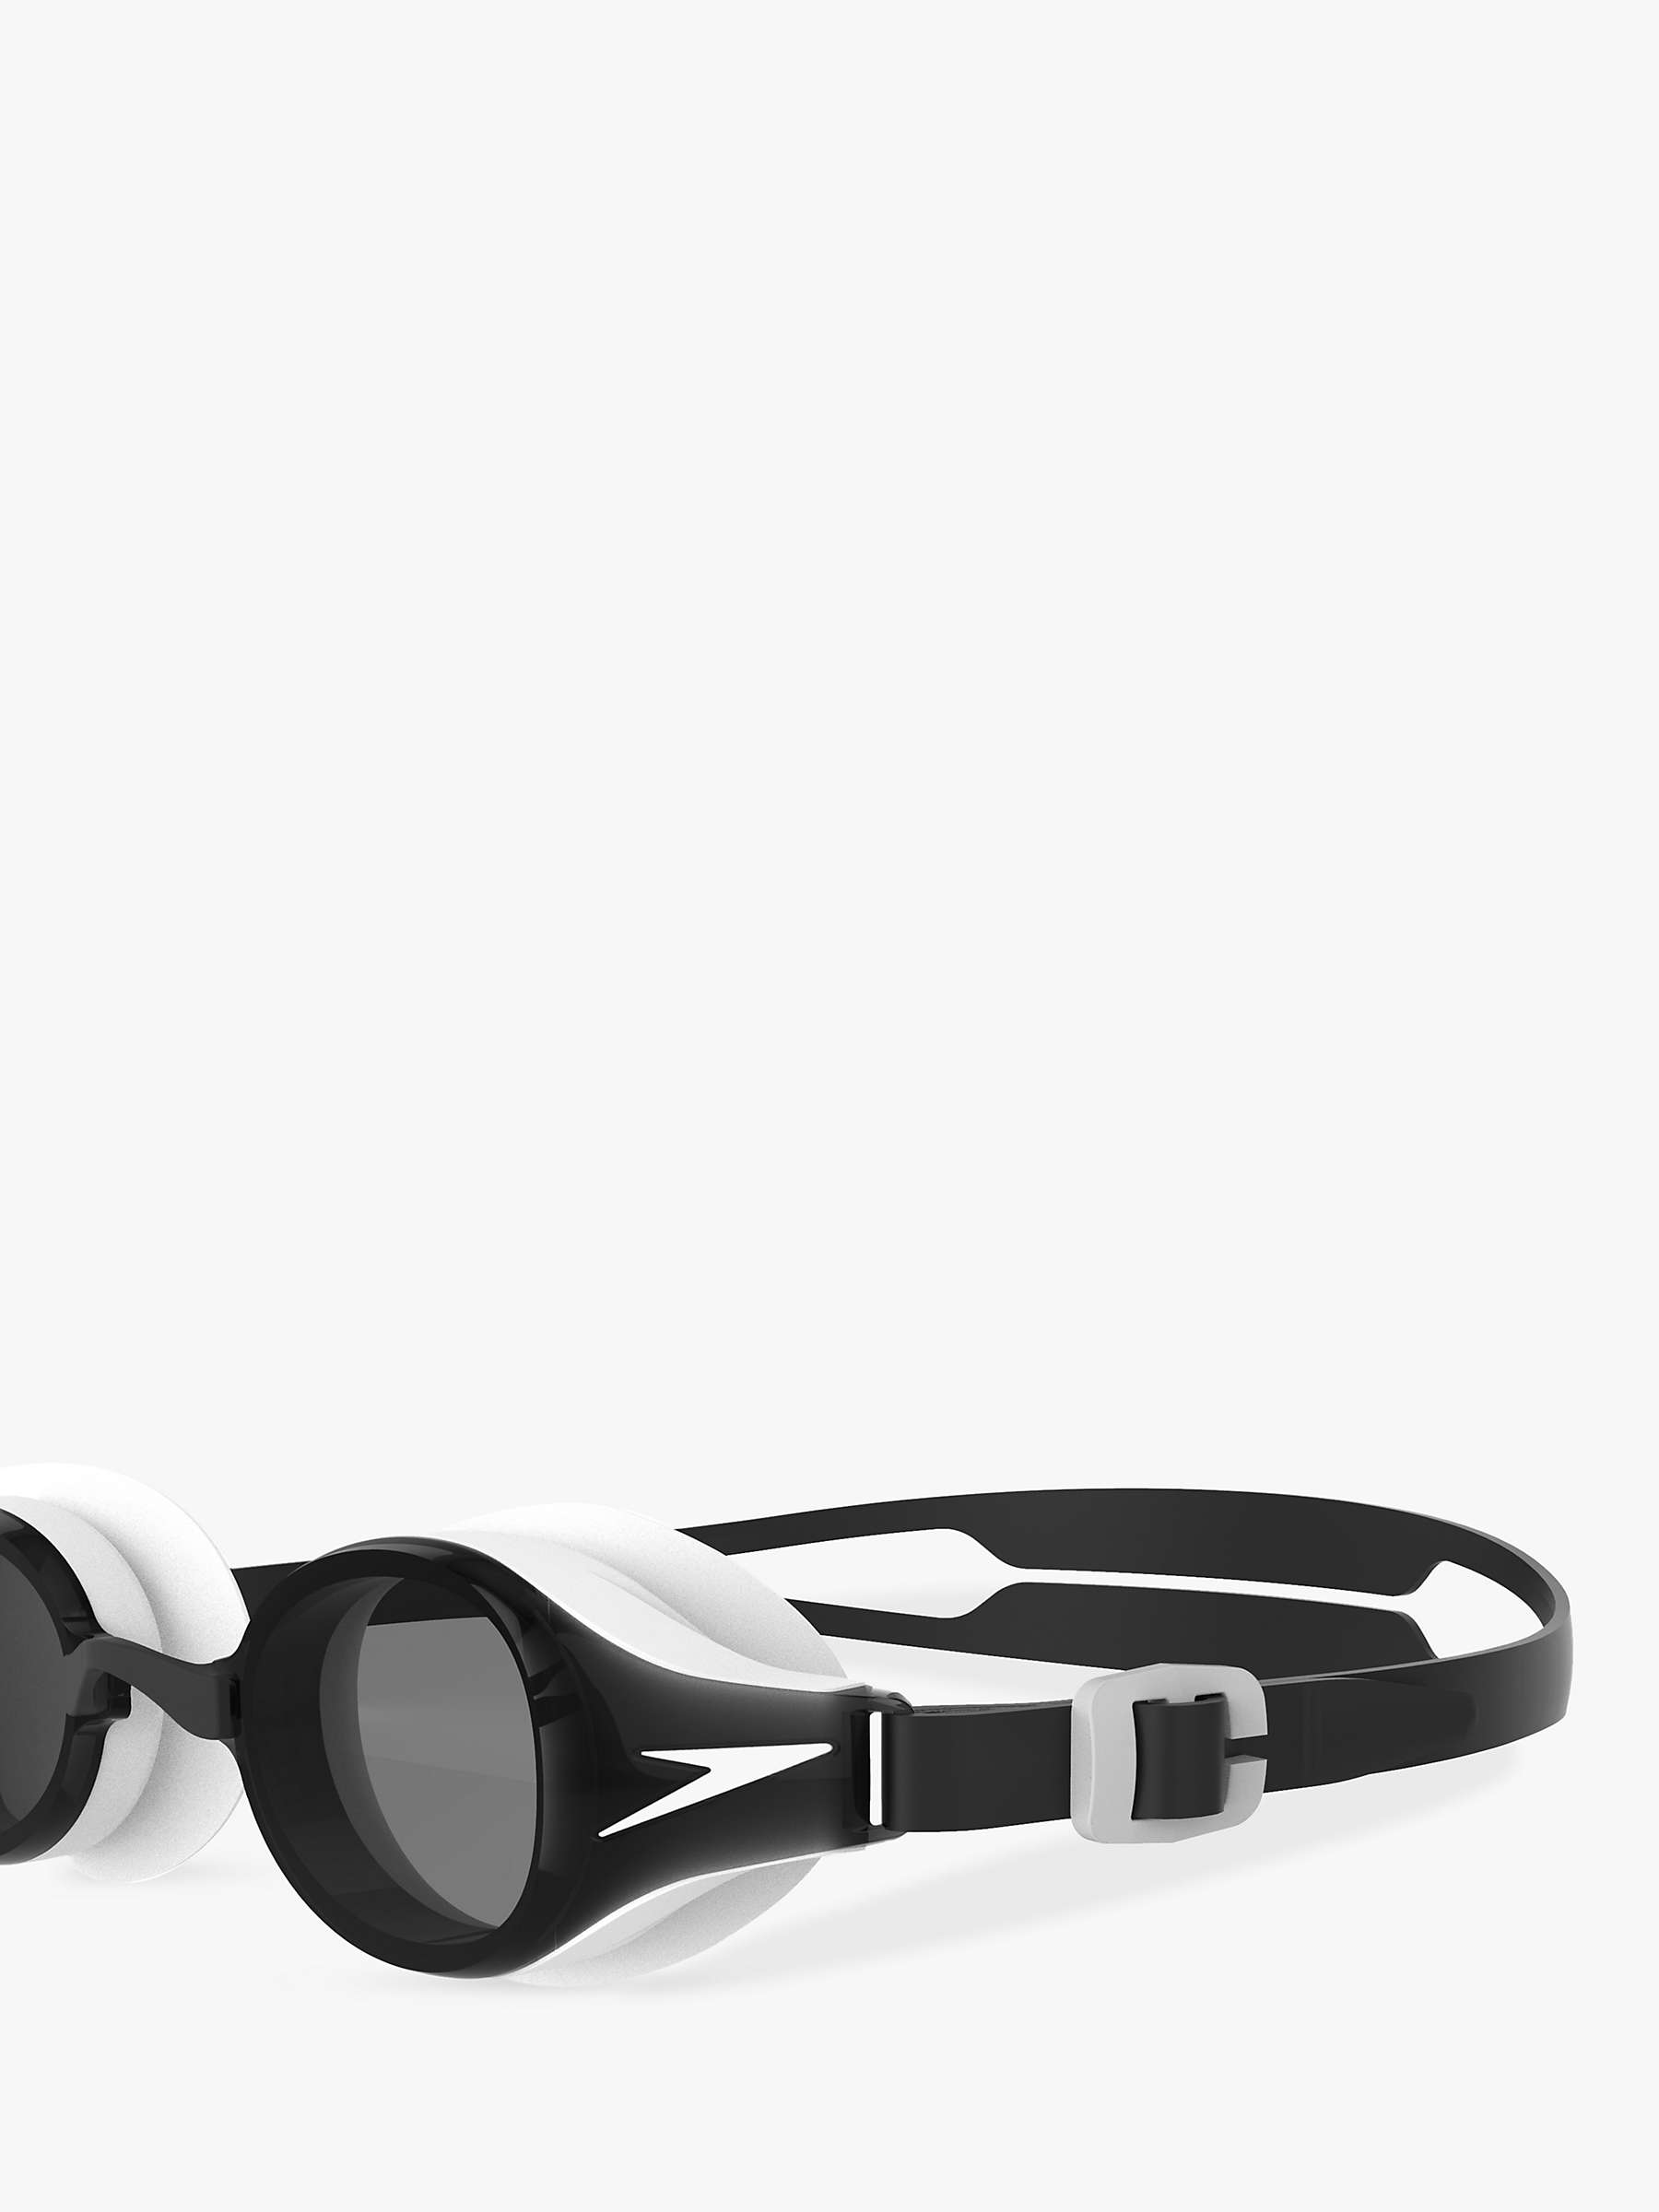 Buy Speedo Kids' Hydropure Swimming Goggles, Black/White Online at johnlewis.com